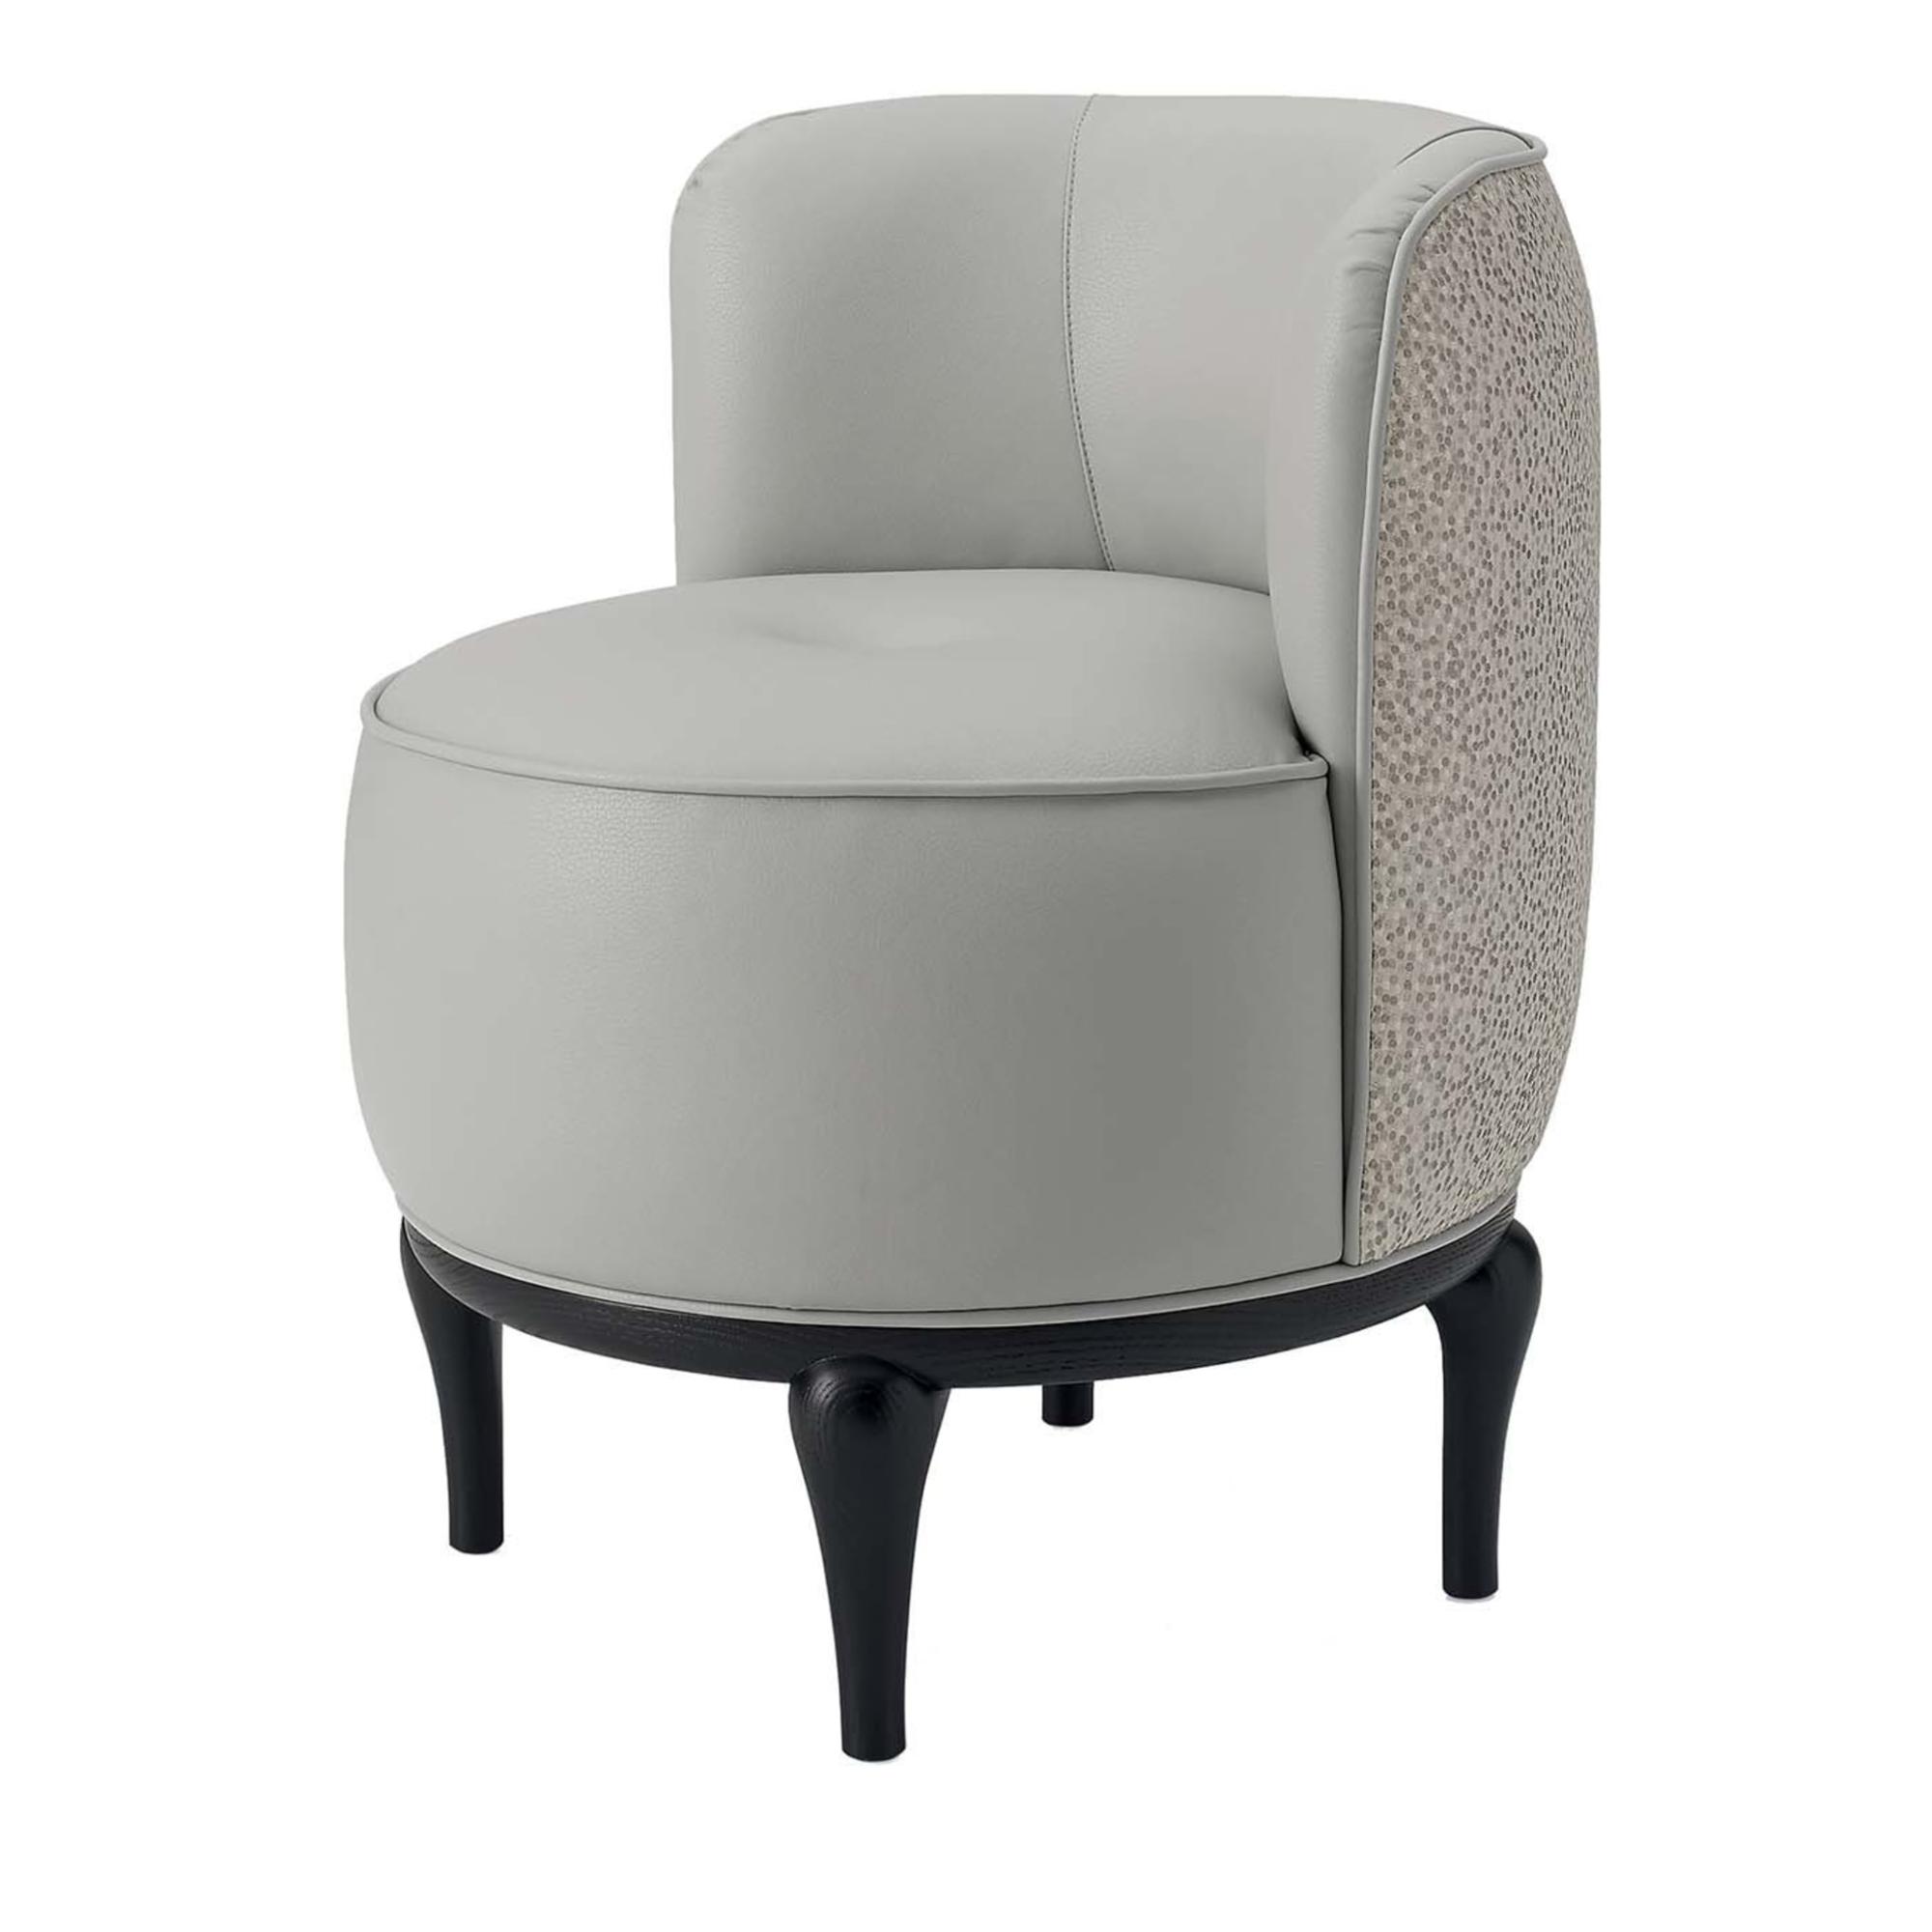 White Round Lounge Chair